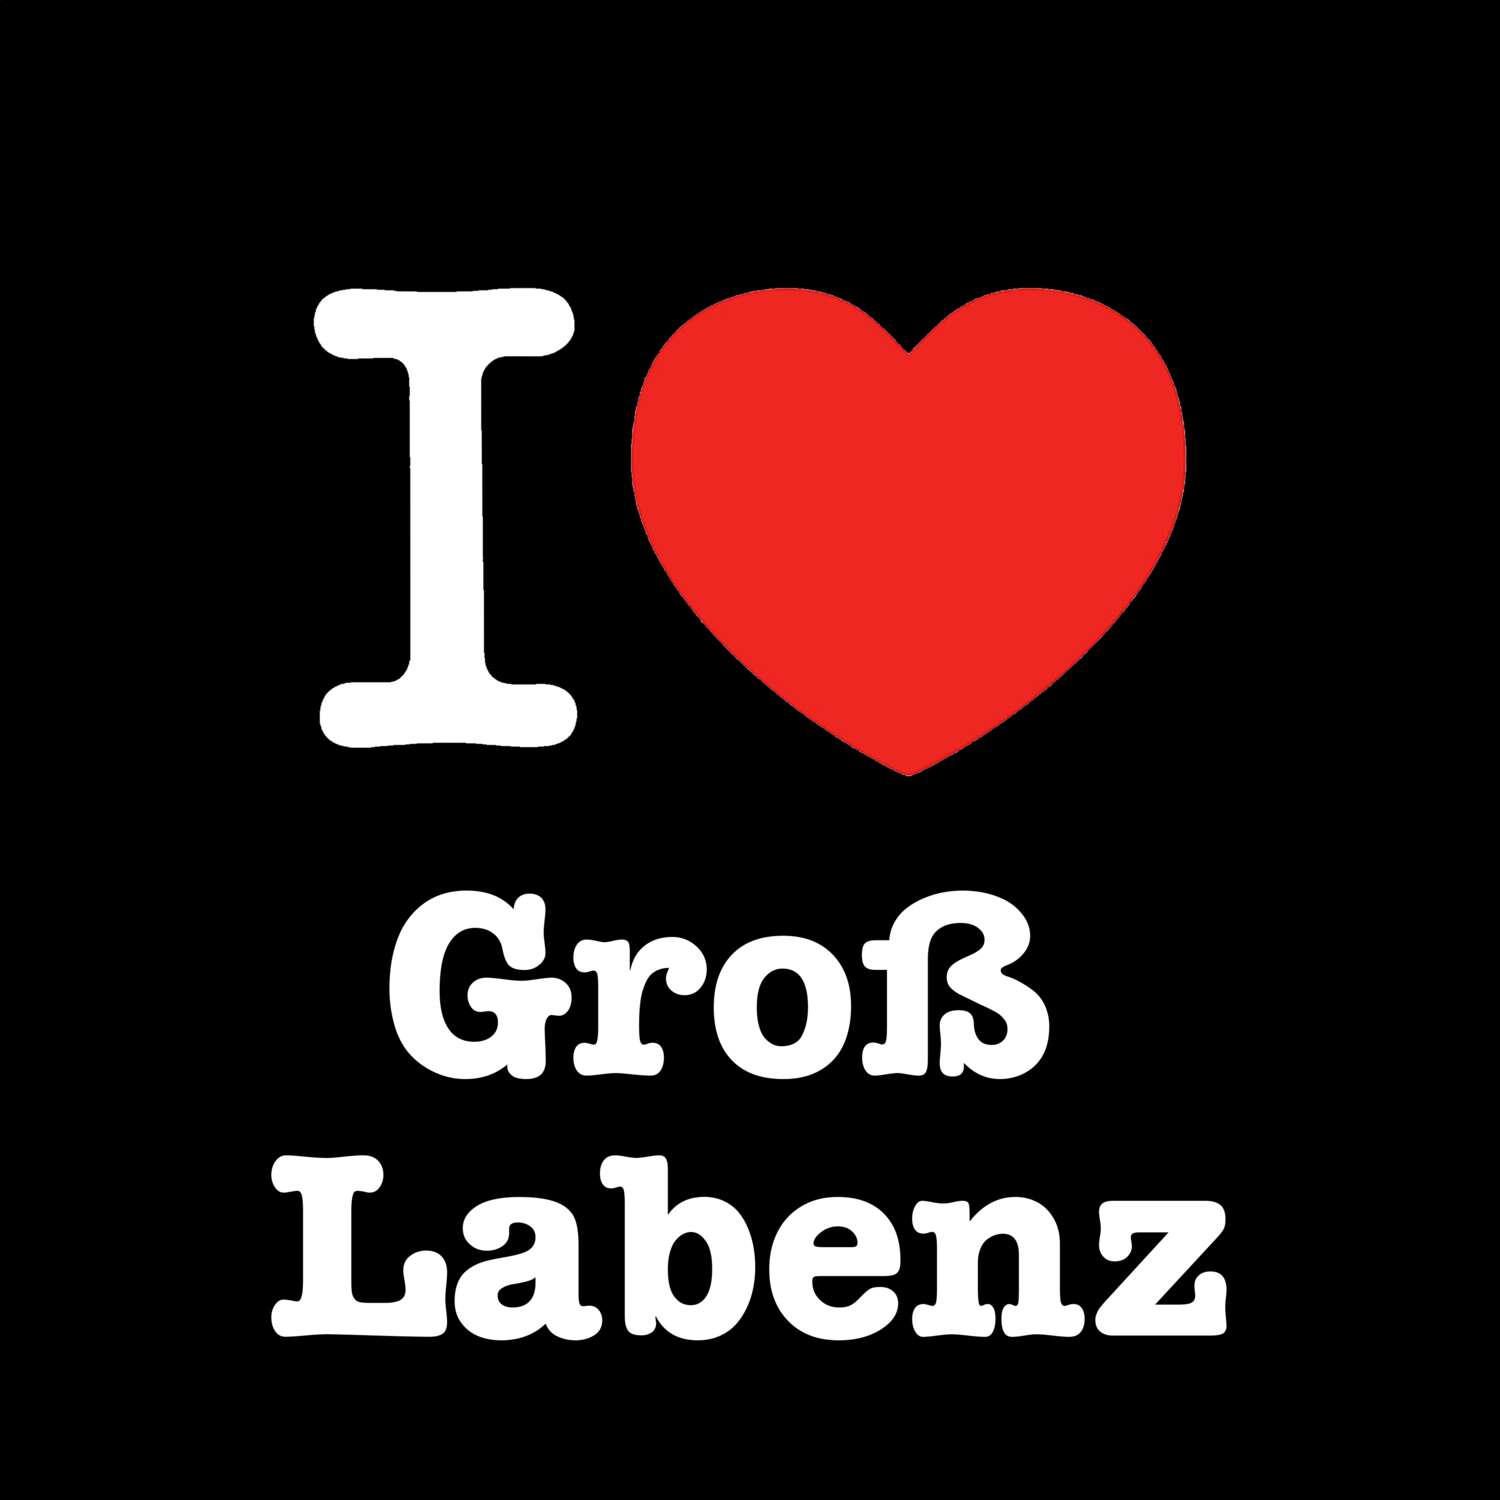 Groß Labenz T-Shirt »I love«